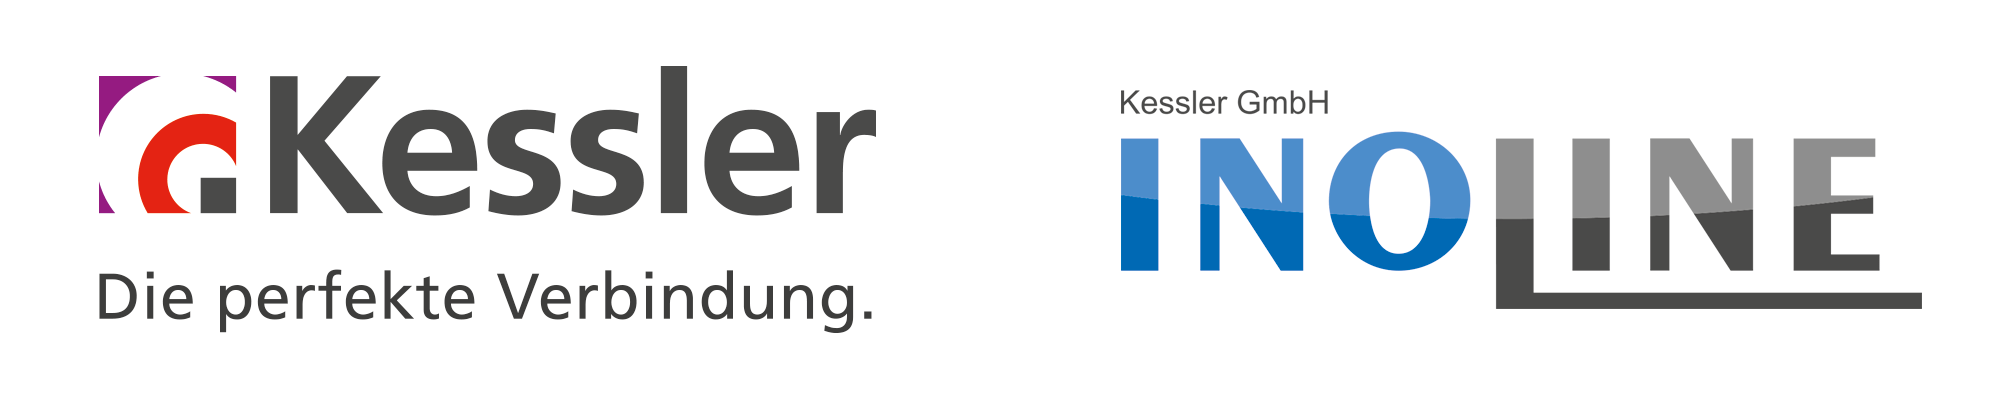 Inoline Kessler GmbH